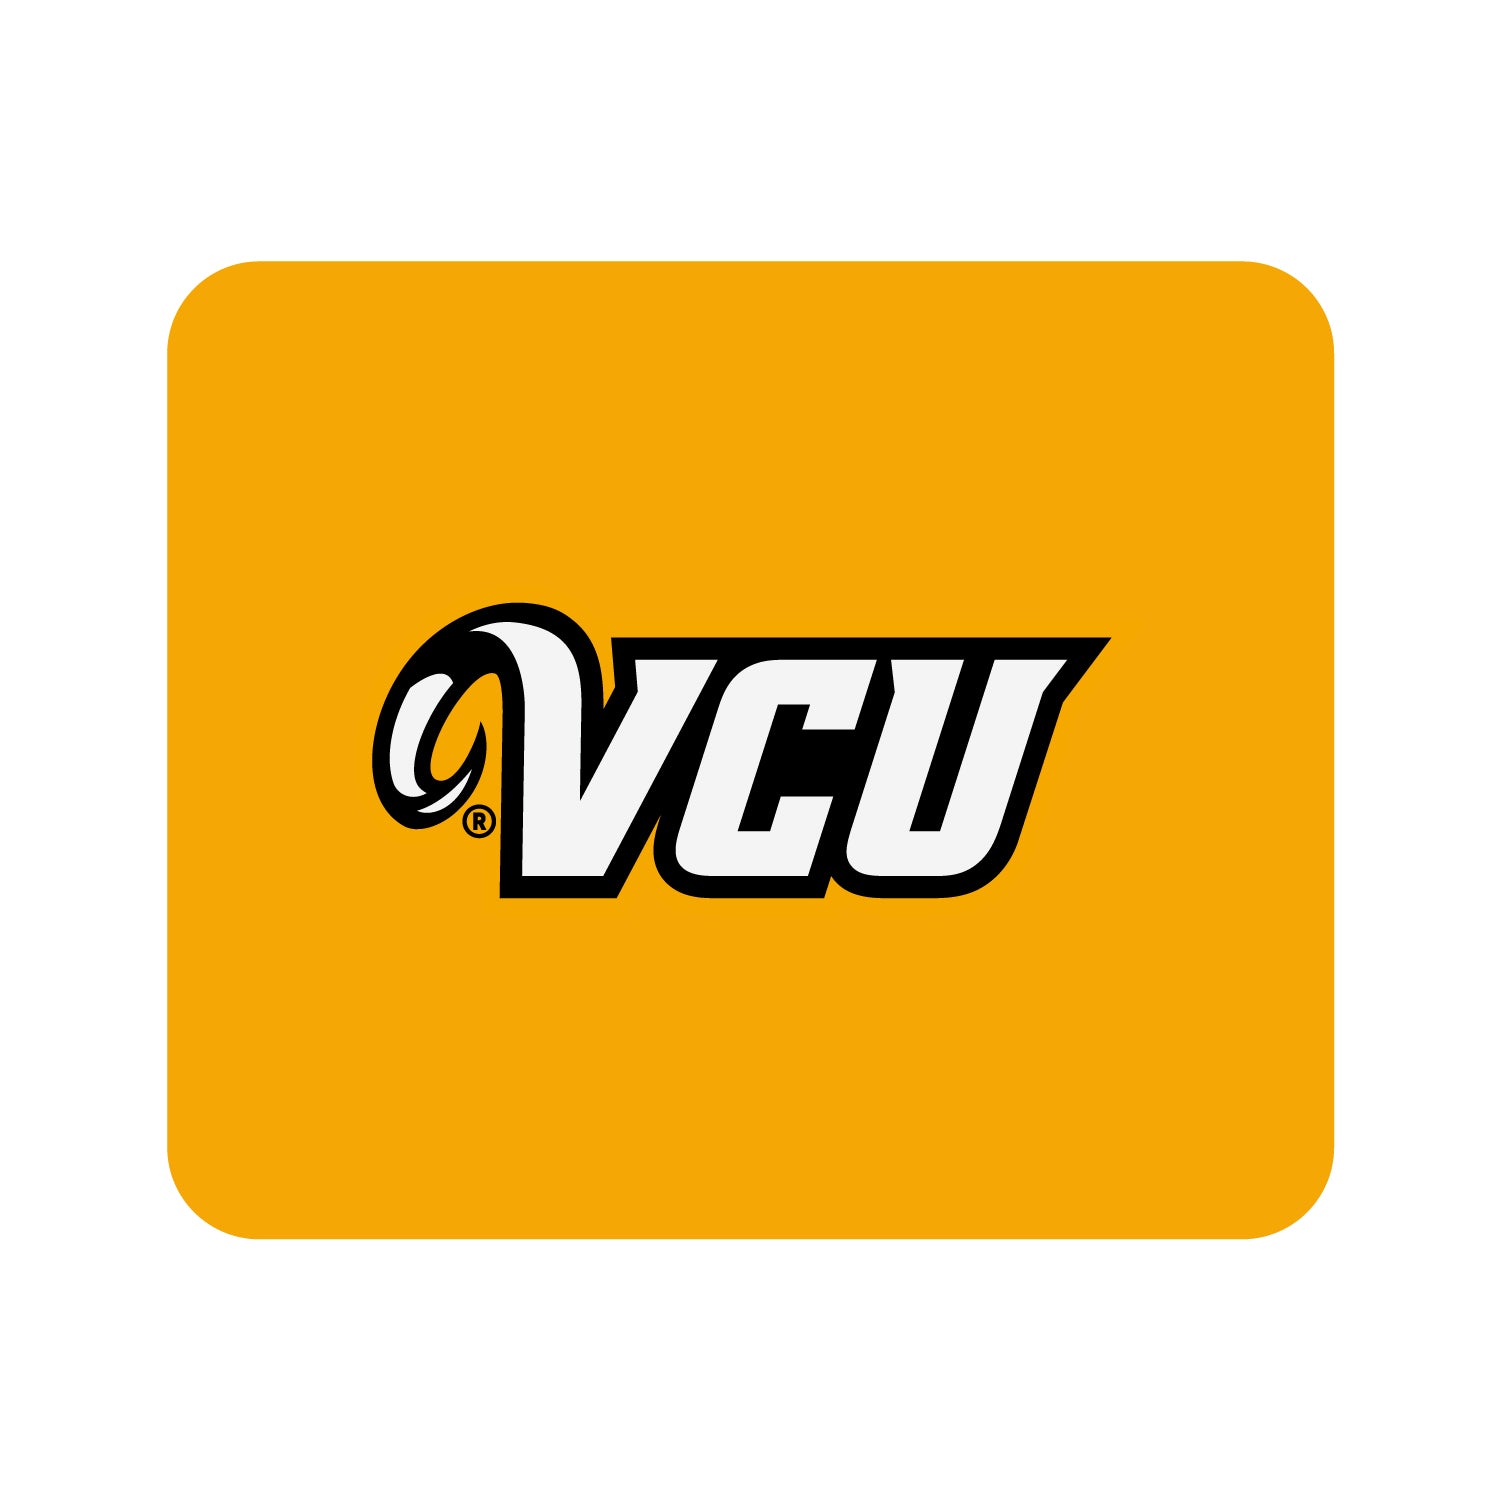 Virginia Commonwealth University - Mousepad, Classic